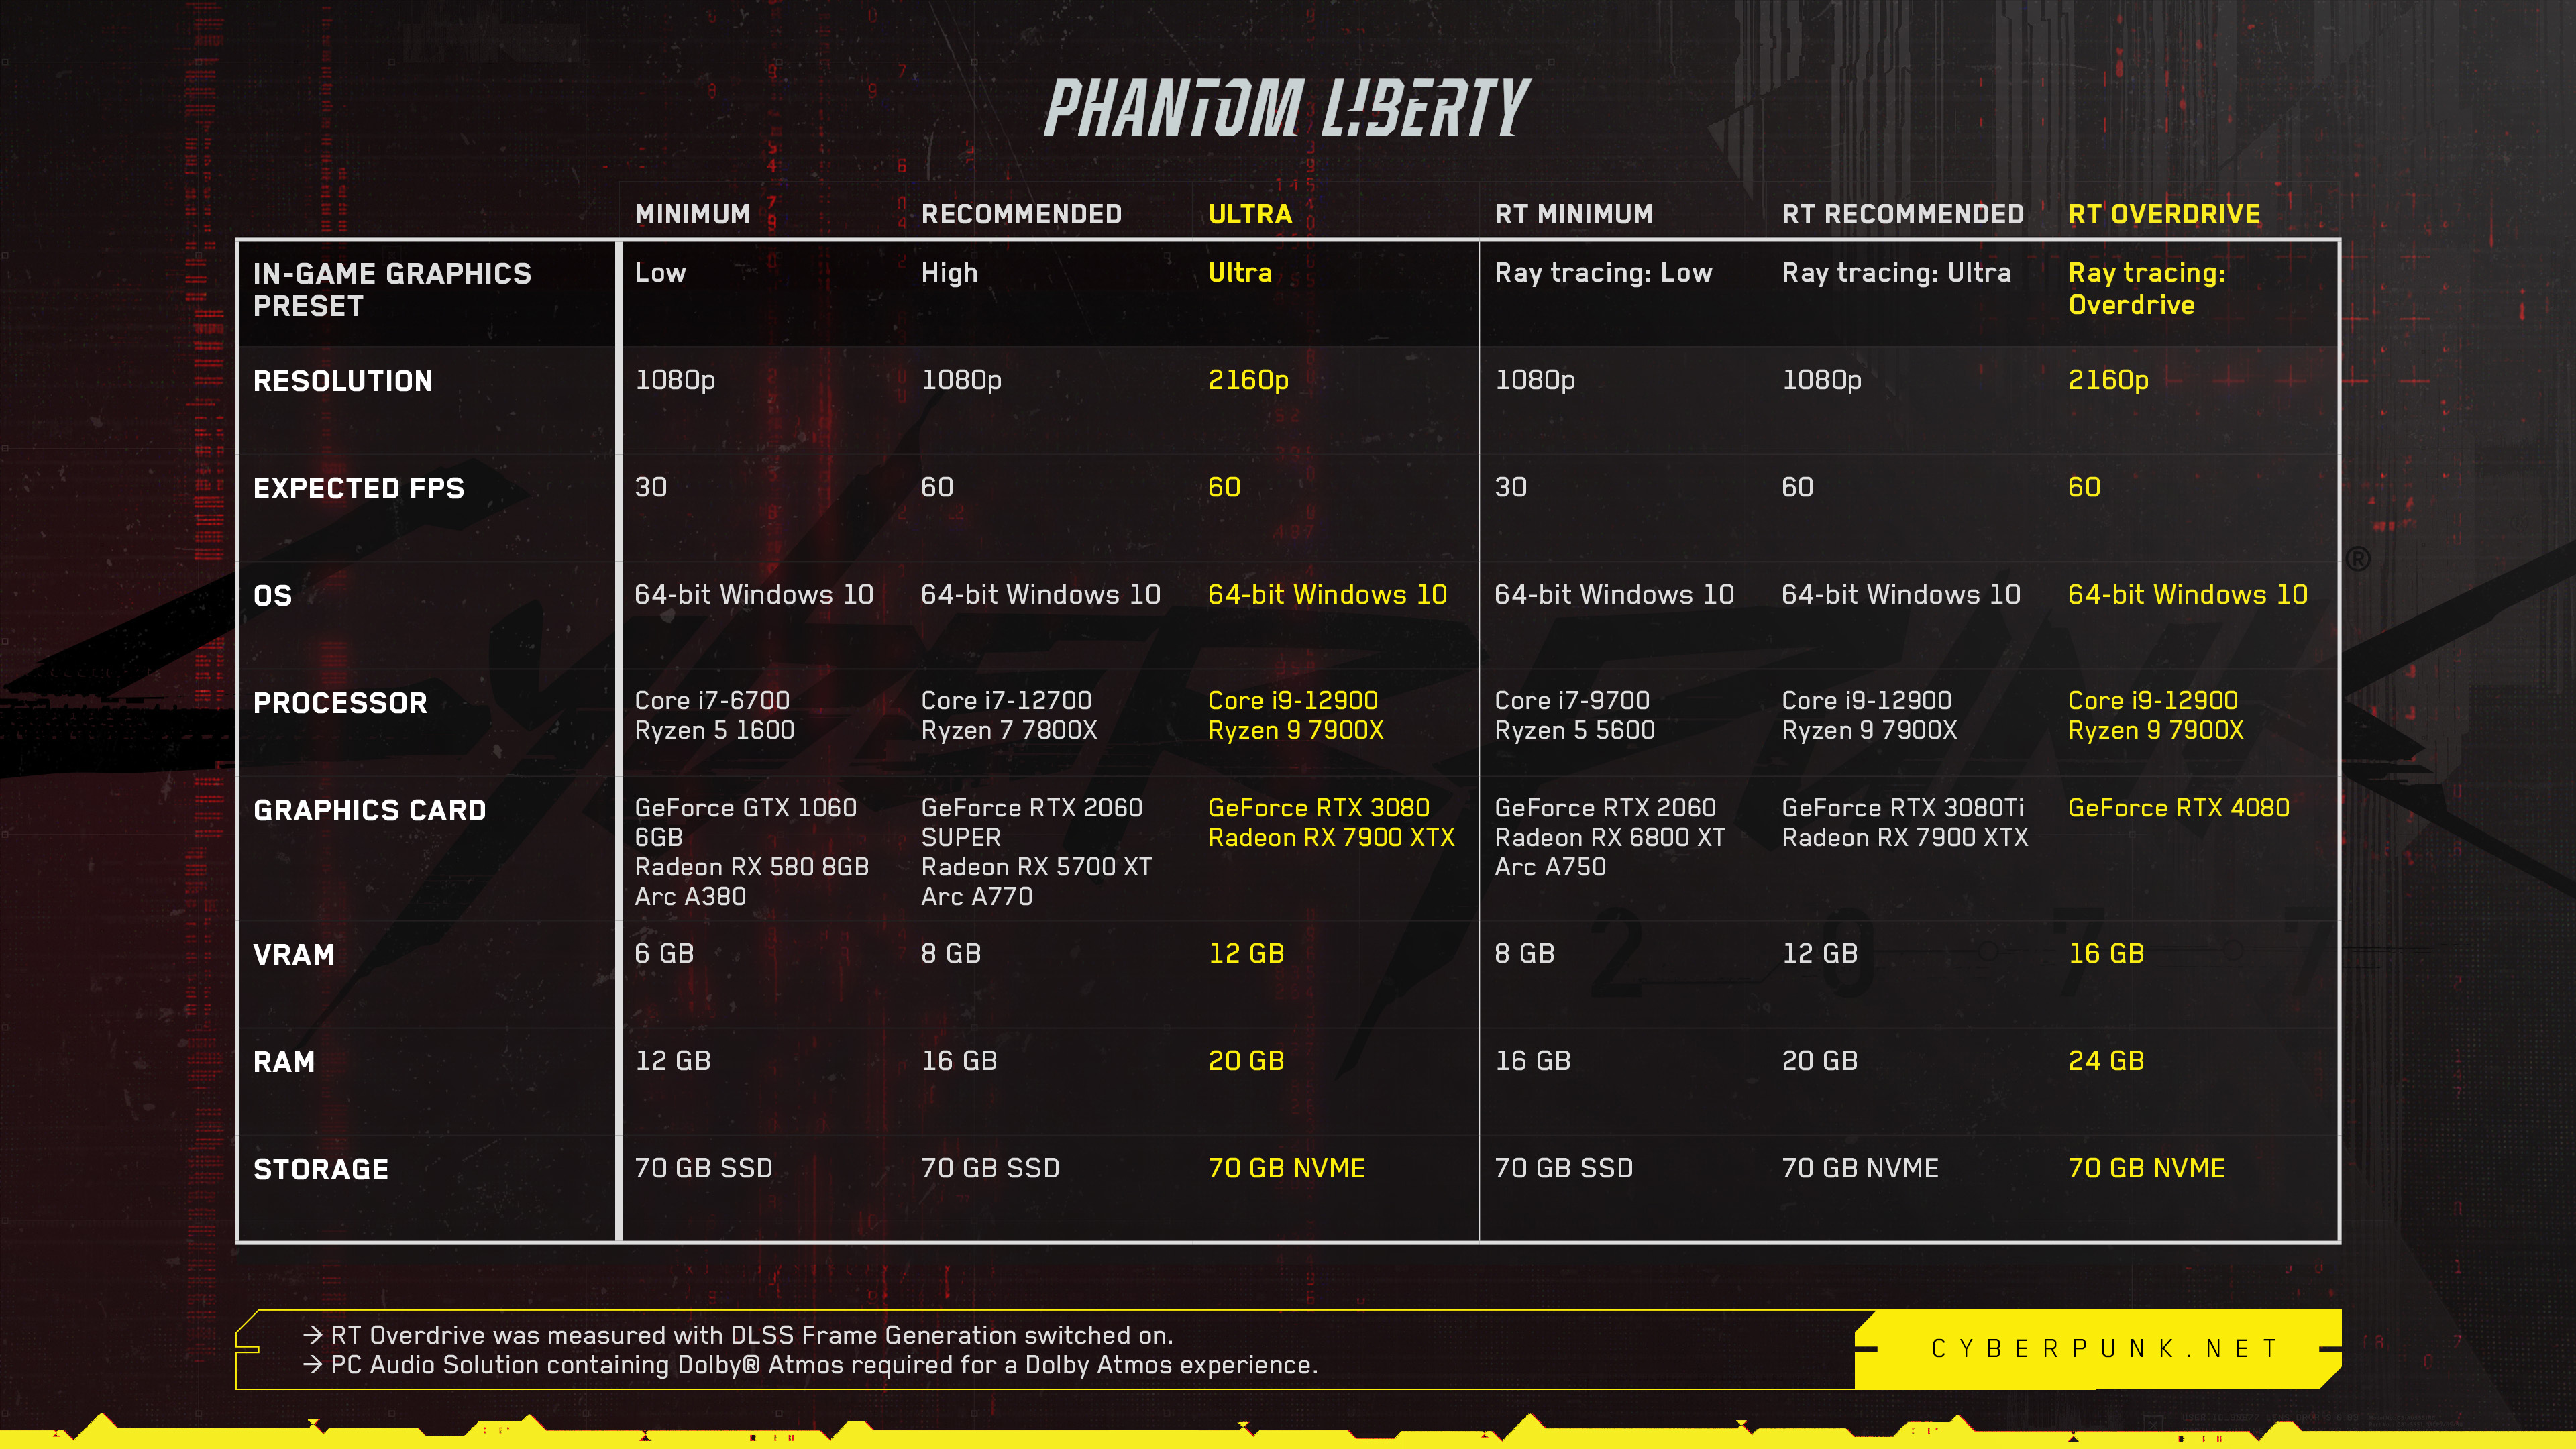 Cyberpunk 2077 director confirms 2.0 and Phantom Liberty are final major  updates